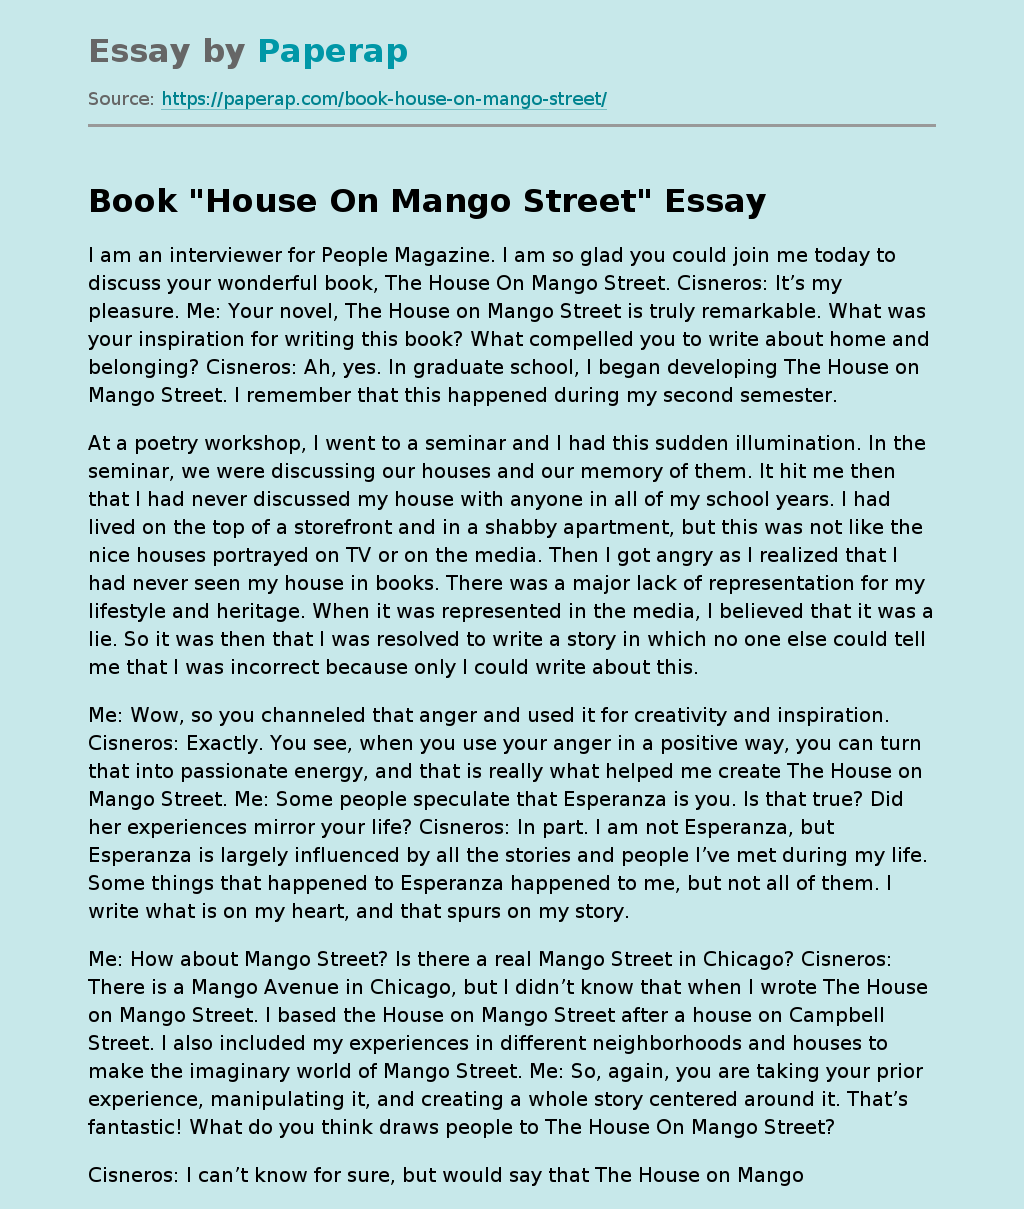 Book "House On Mango Street"